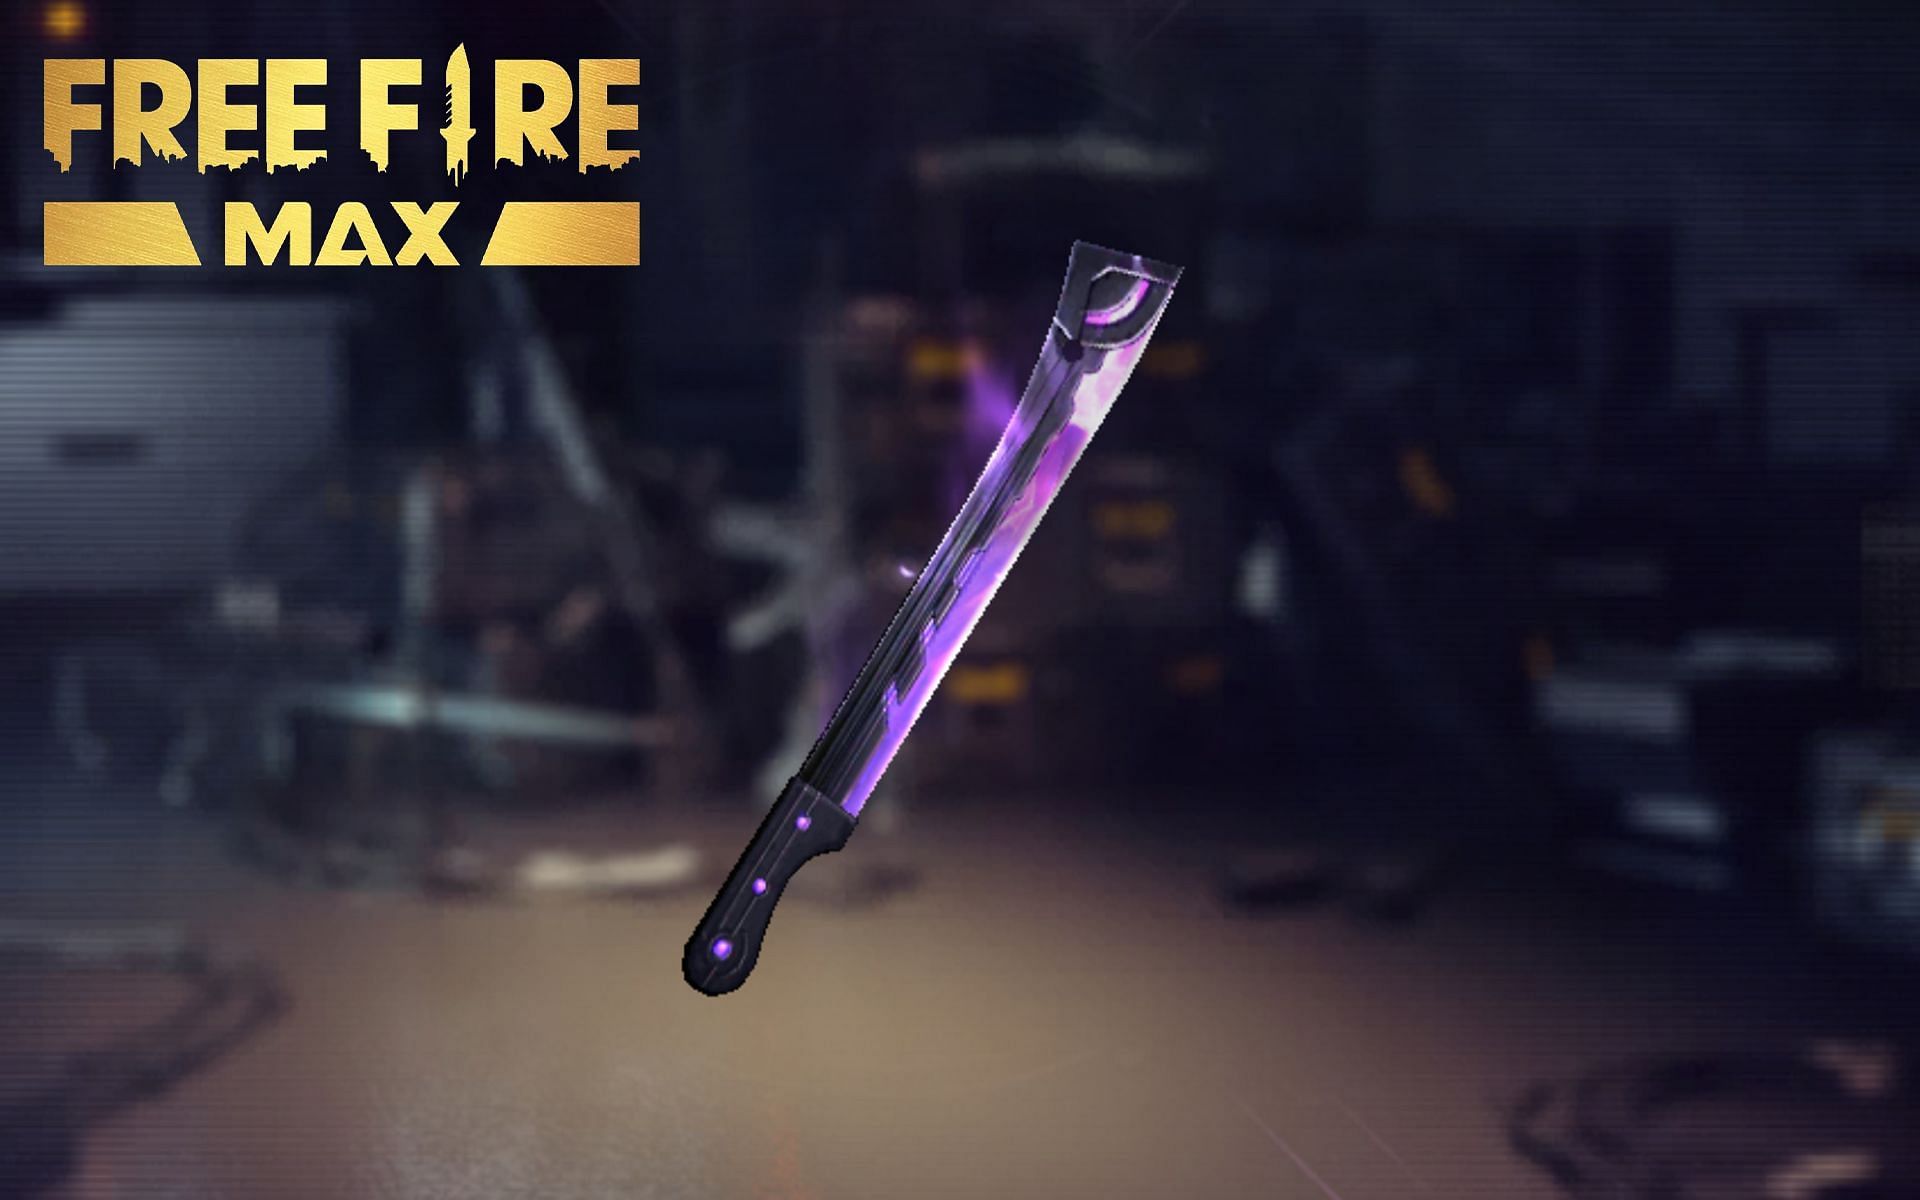 Here is how the Night Blade skin looks in Free Fire MAX (Image via Sportskeeda)